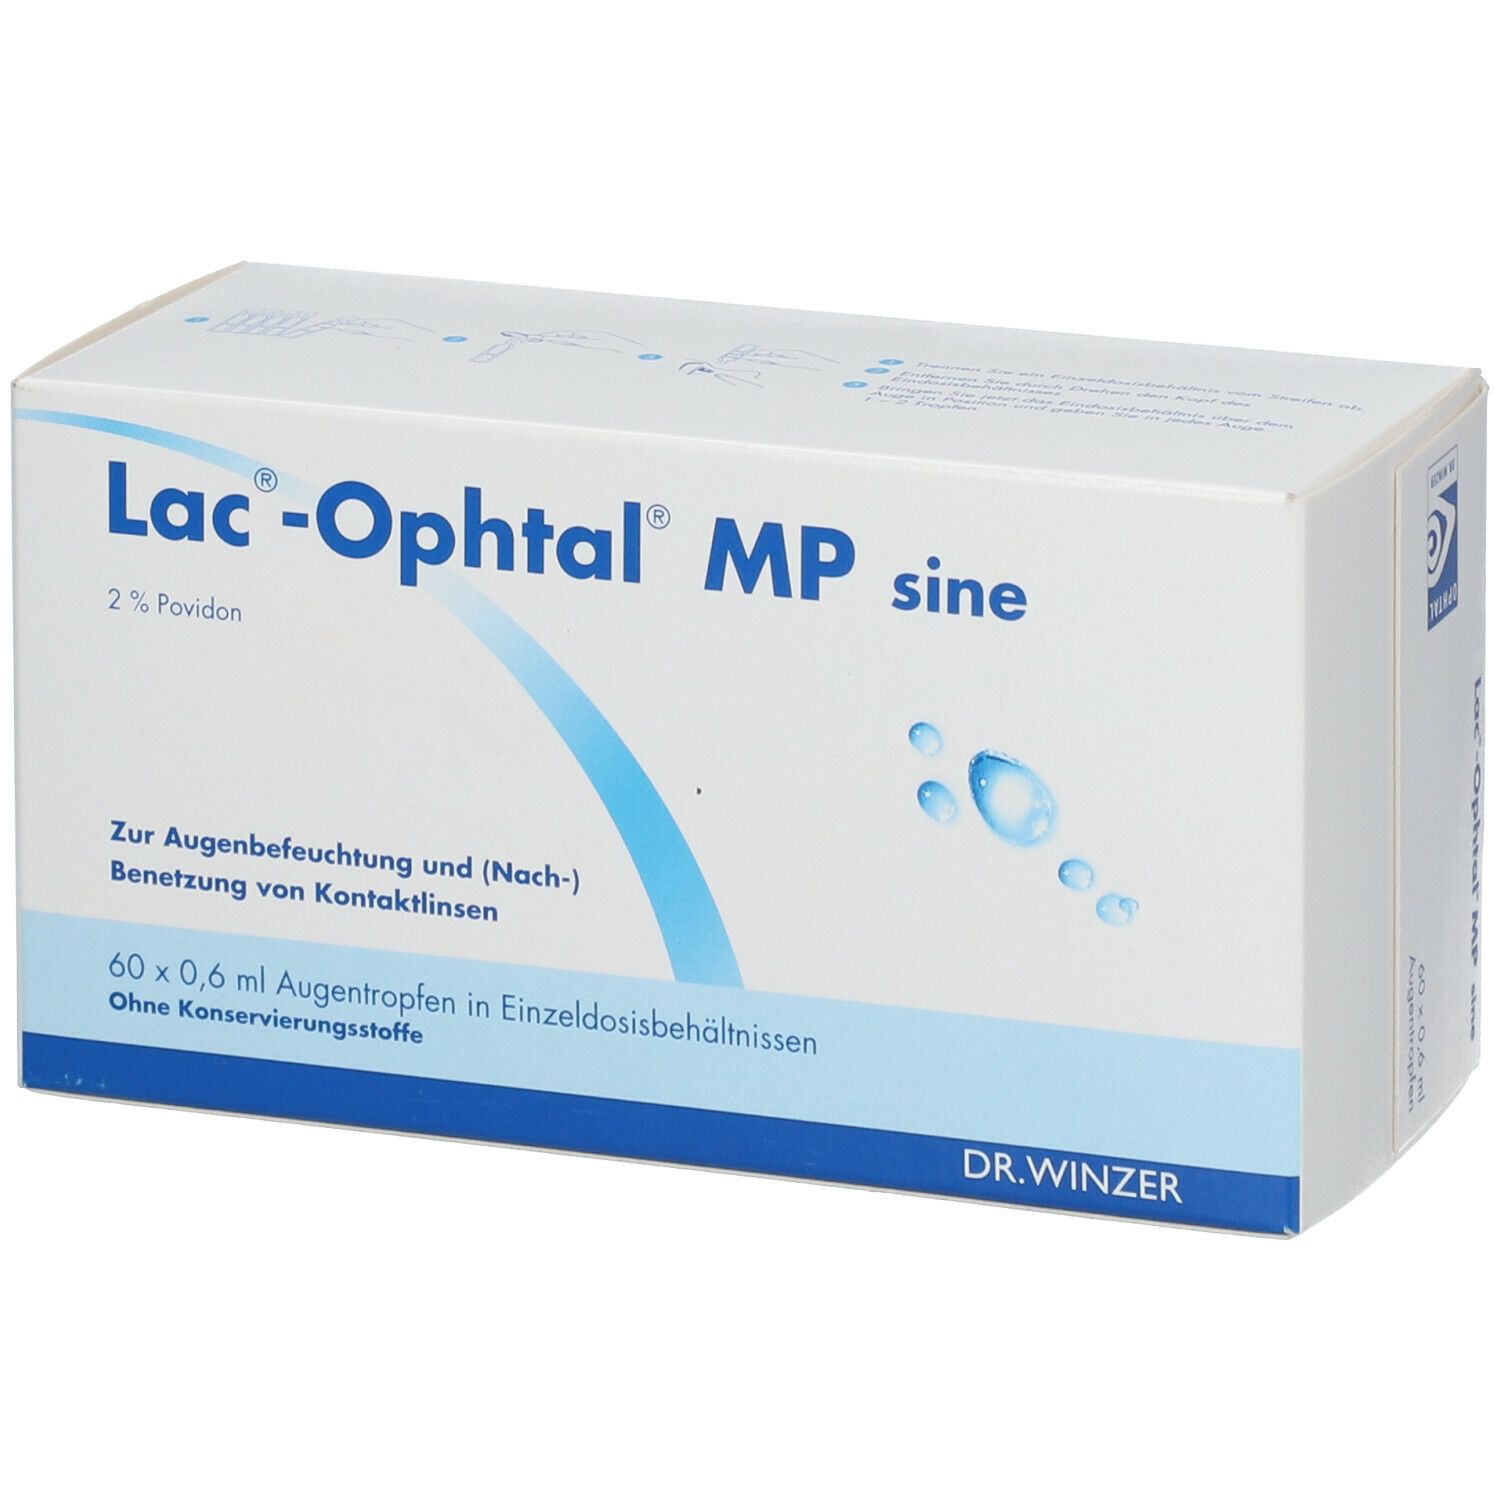 Lac®-Ophtal® MP sine